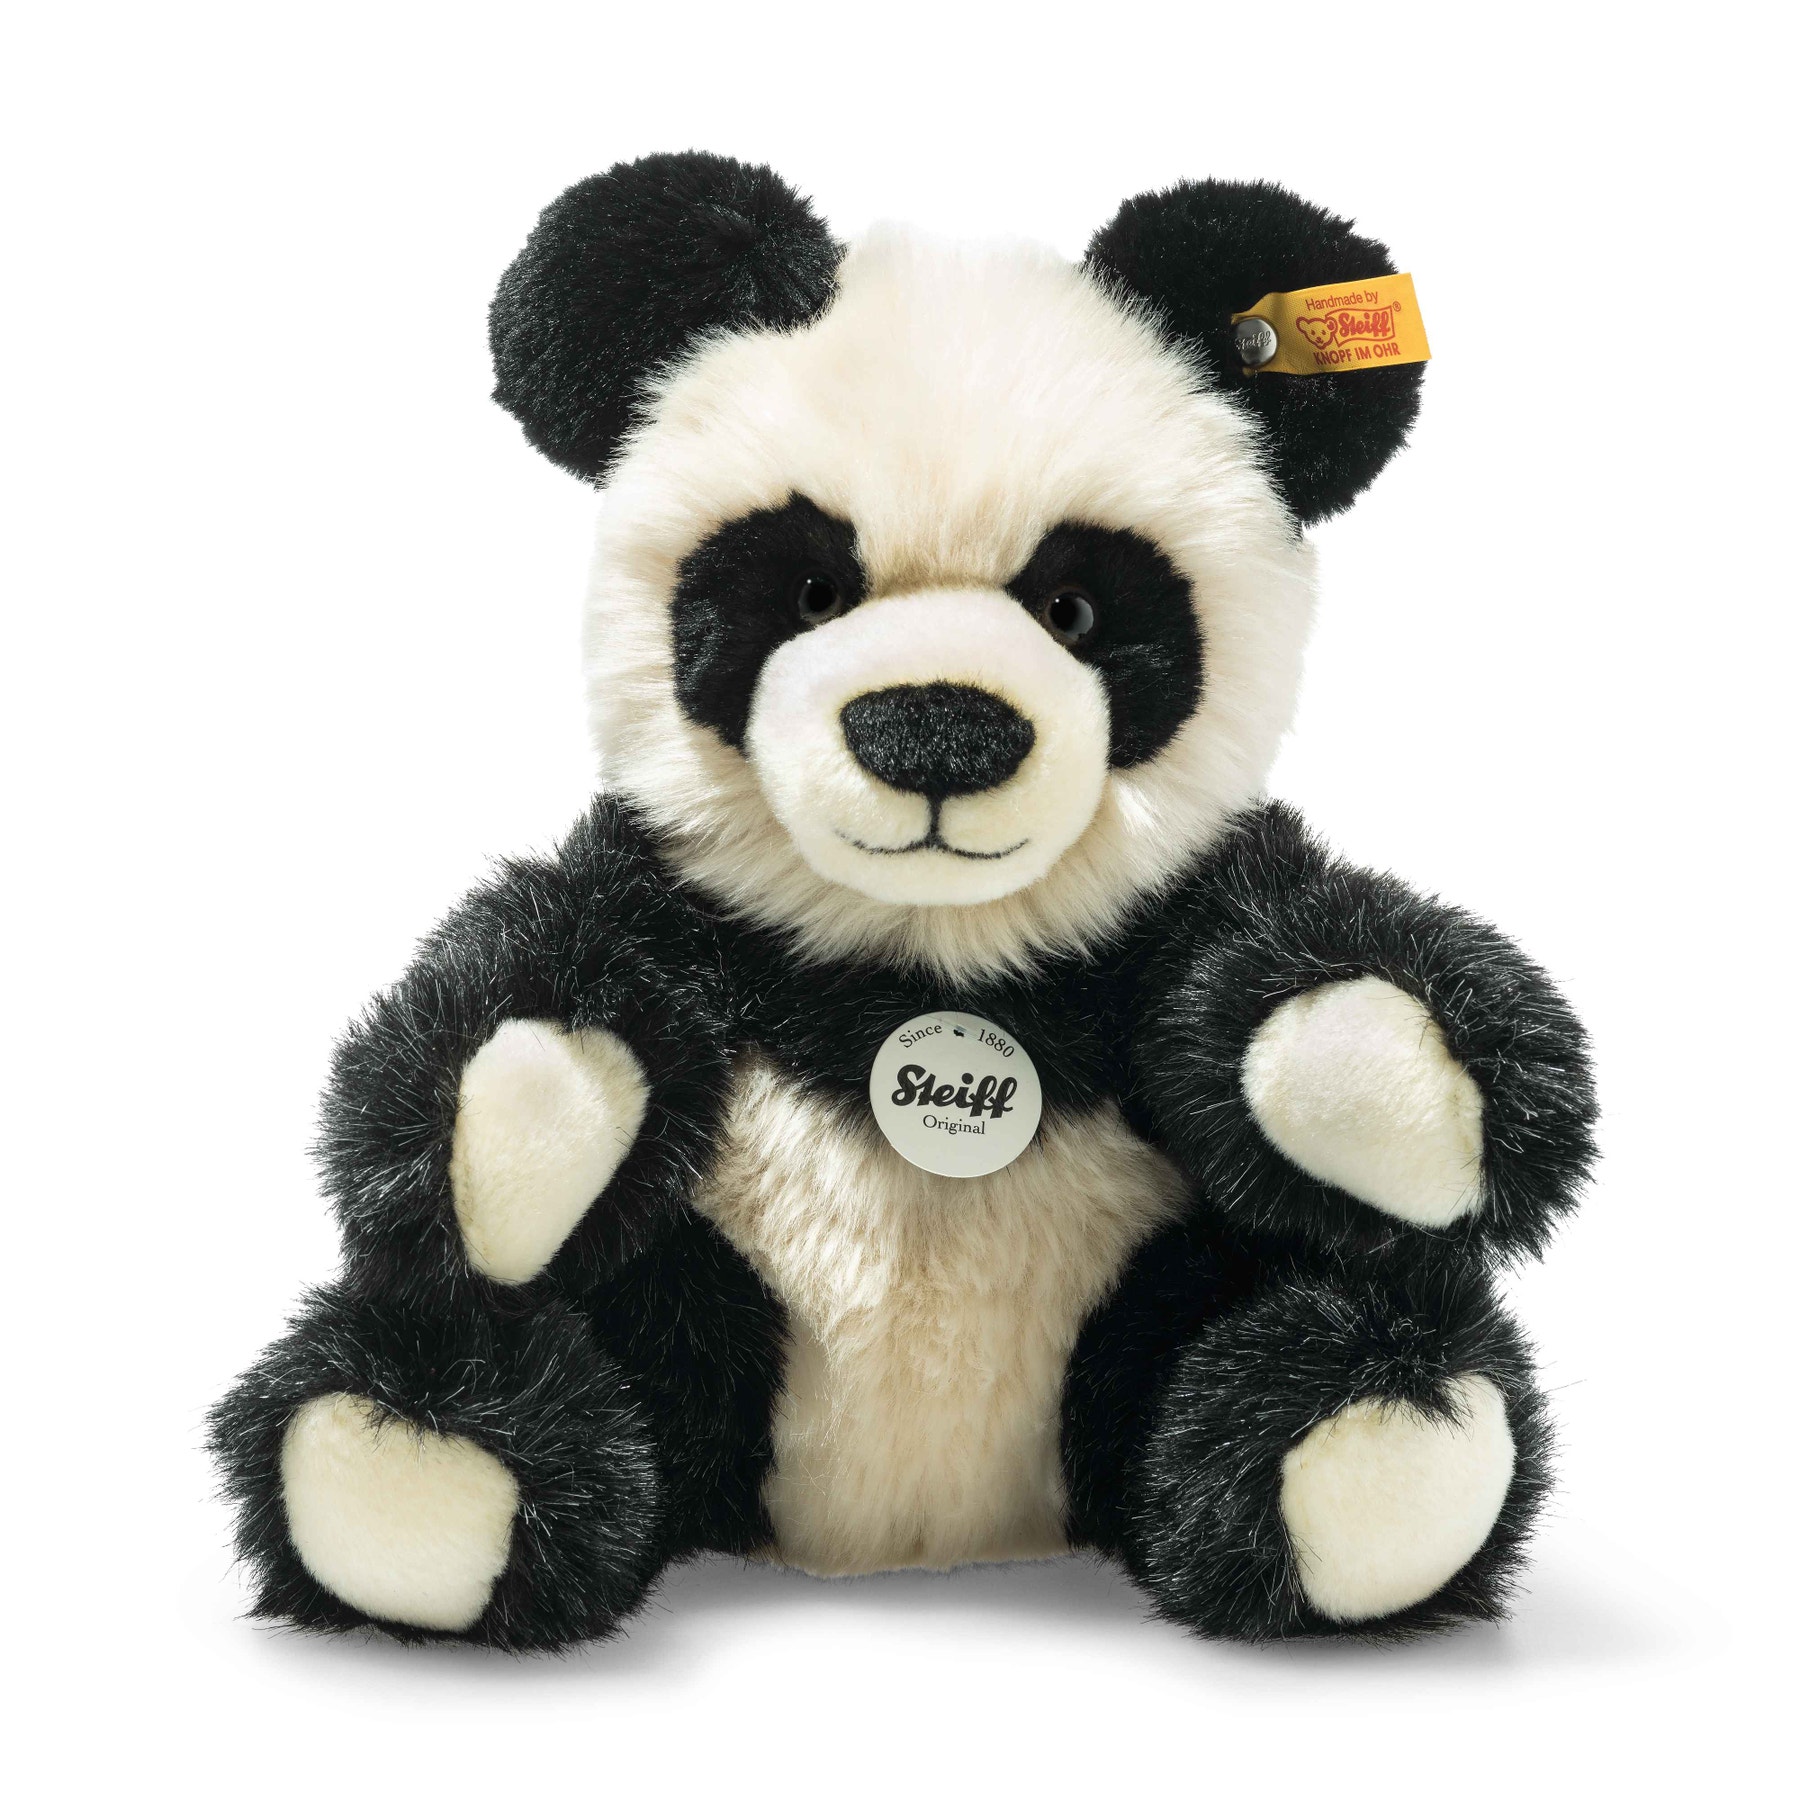 TOP Steiff 060151 Teddybär Panda Manschli 30 cm schwarz-weiß 